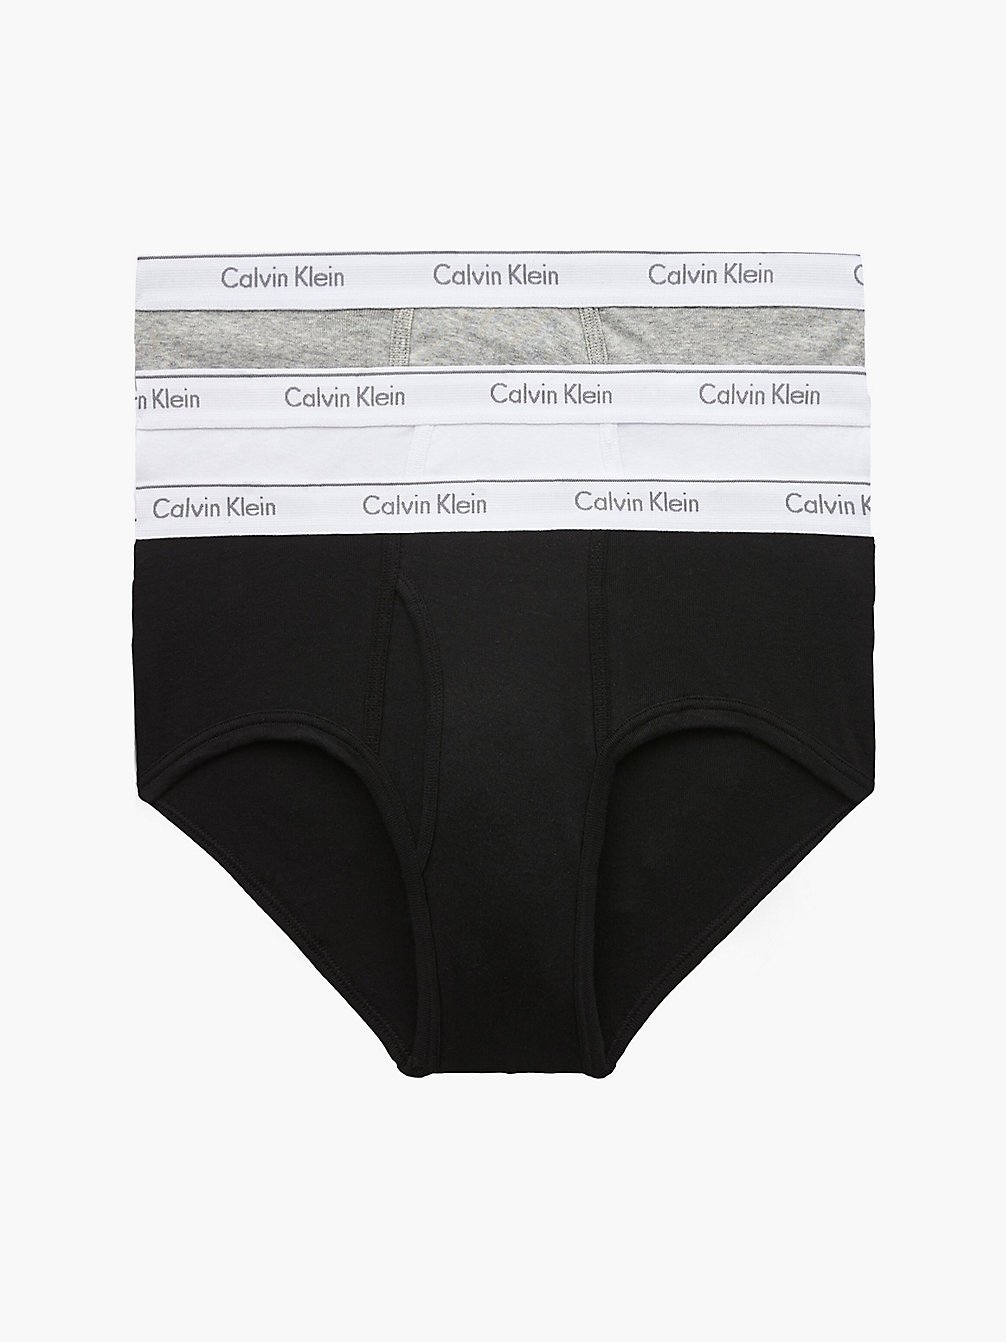 BLACK/WHITE/GREY HEATHER Lot De 3 Slips - Cotton Classics undefined hommes Calvin Klein